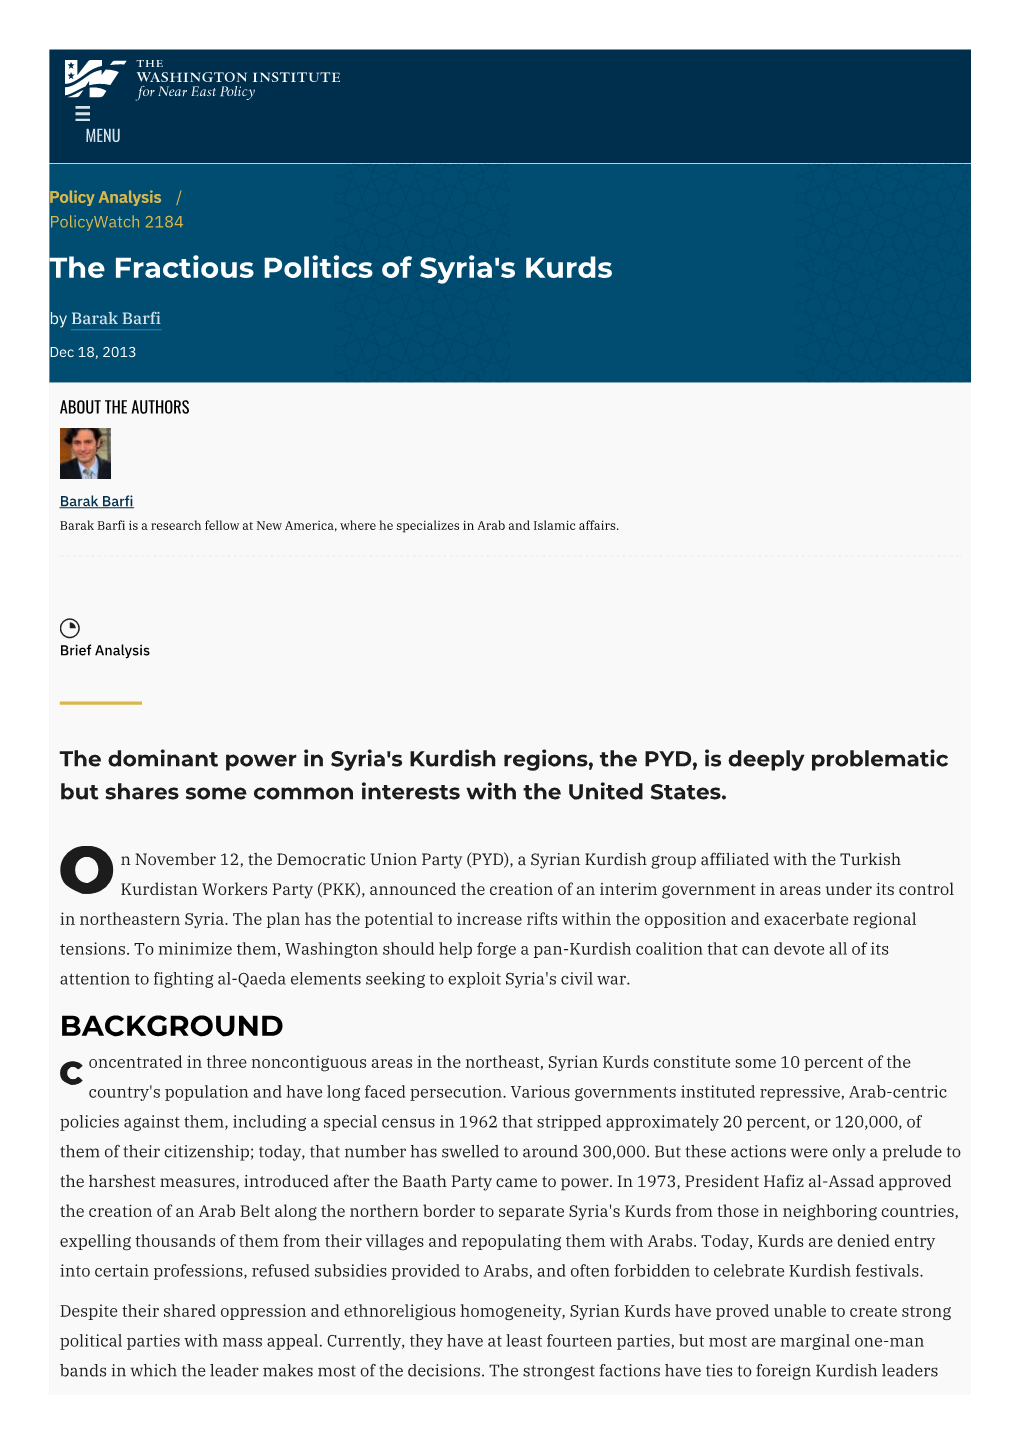 The Fractious Politics of Syria's Kurds | the Washington Institute